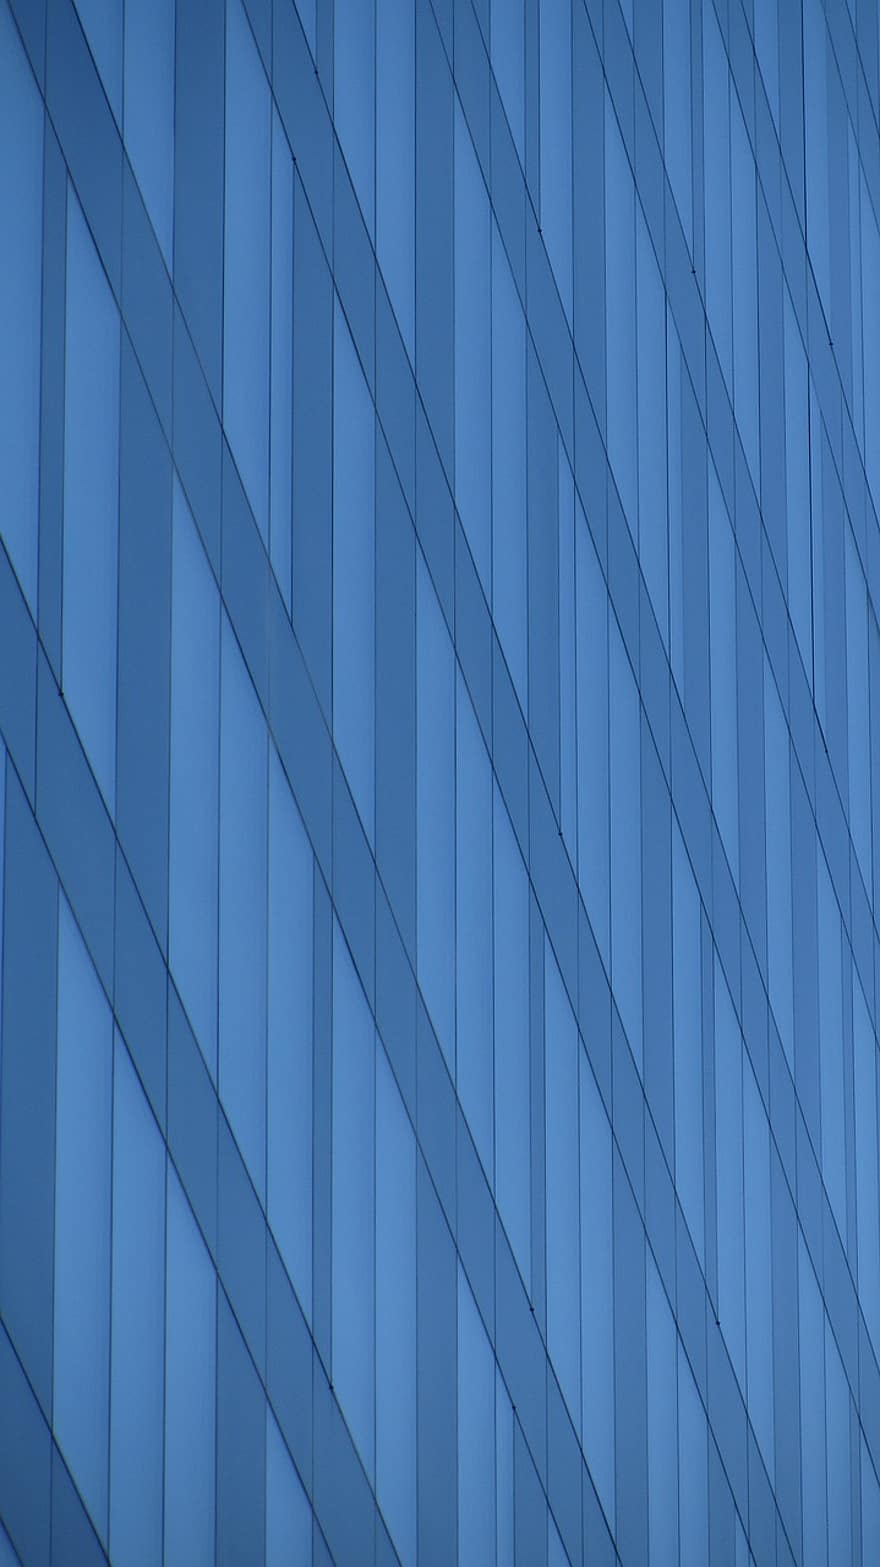 edificio de oficinas, ventana, moderno, inclinaciones, líneas, modelo, resumen, antecedentes, arquitectura, diseño, azul